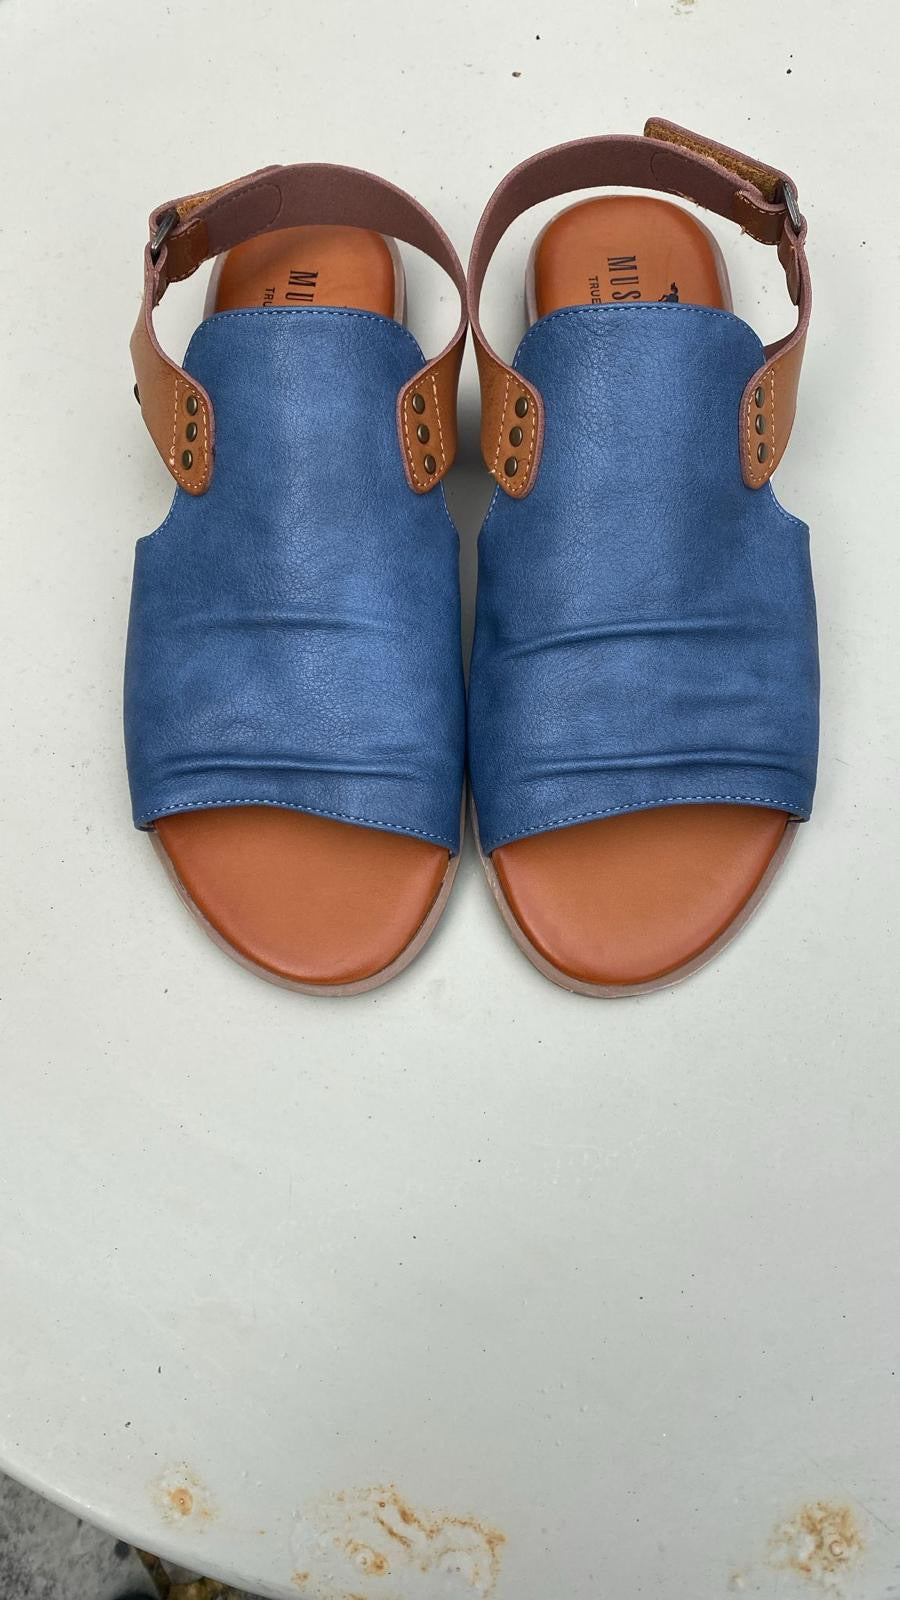 Leather Buckle Sandal in Denim Blue